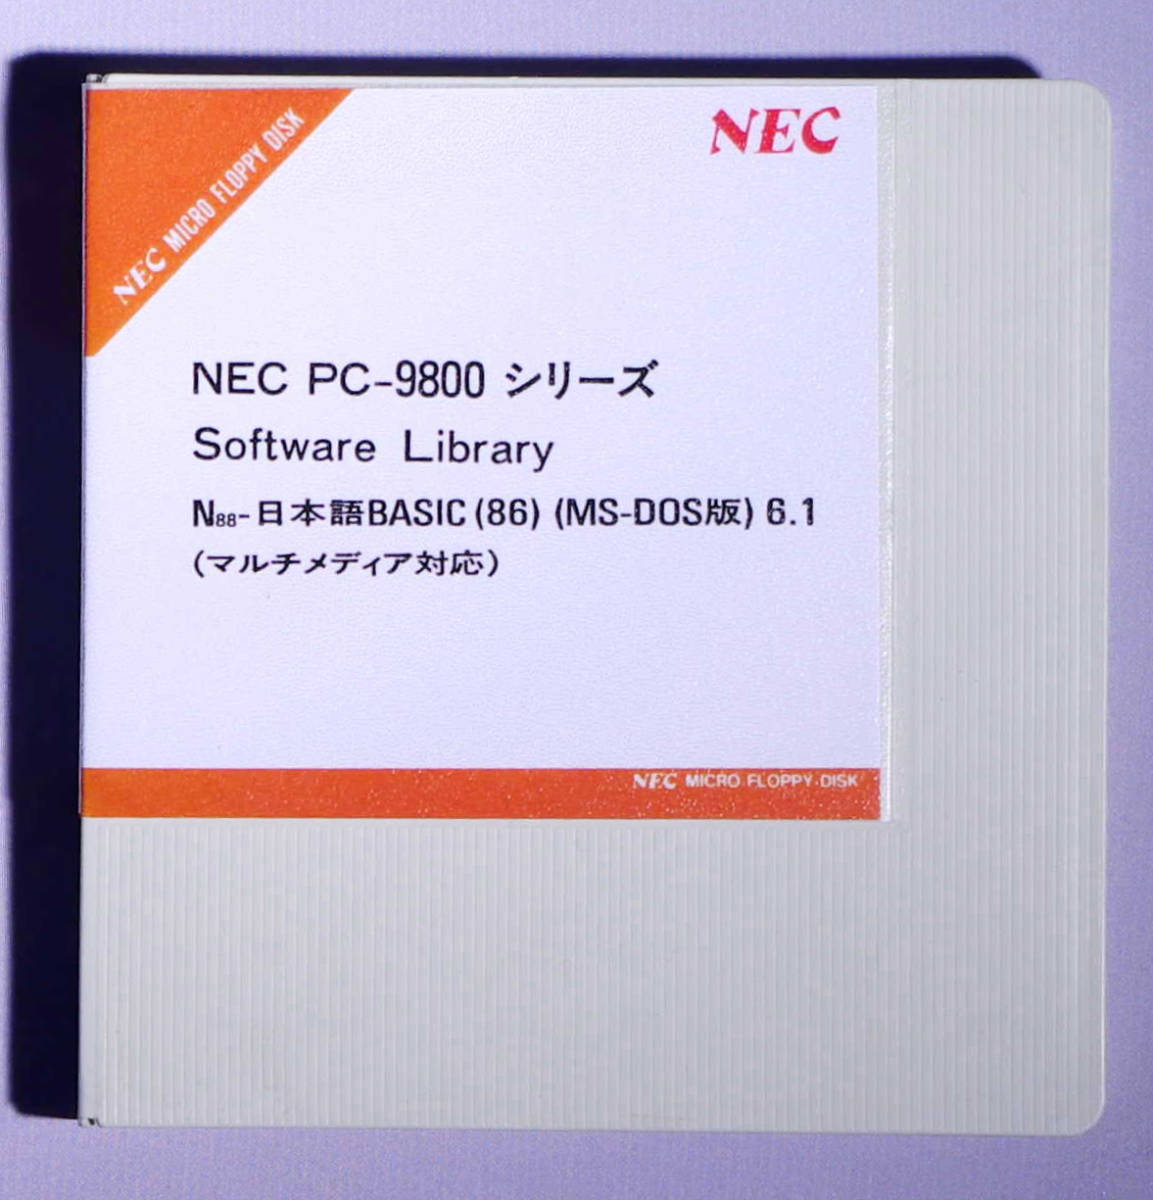 NEC N88-日本語BASIC(86) MS-DOS版 Ver.6.0 - 通販 - pinehotel.info